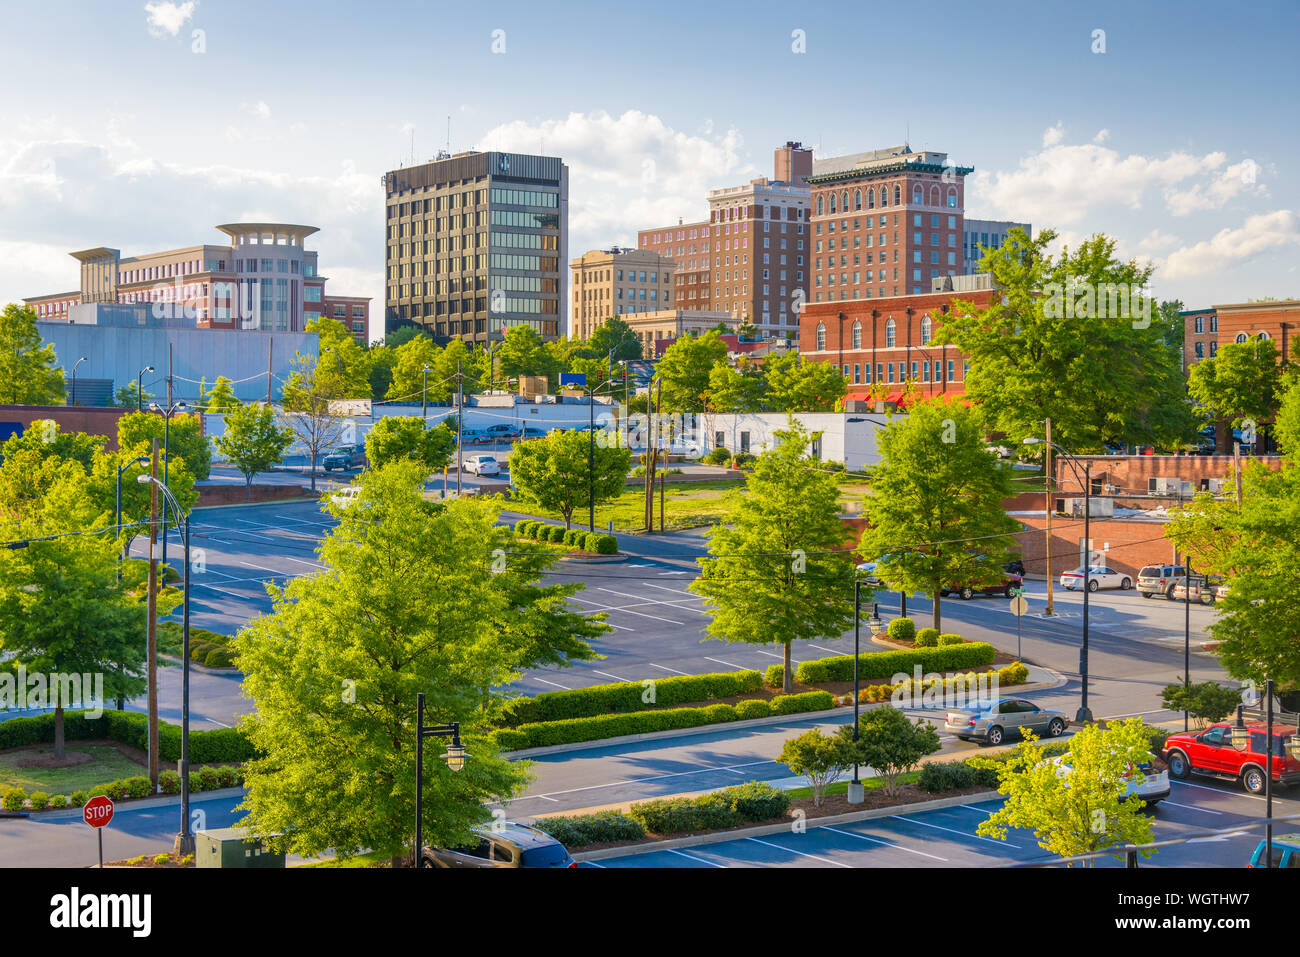 Greenville, South Carolina, USA downtown buildings. Stock Photo